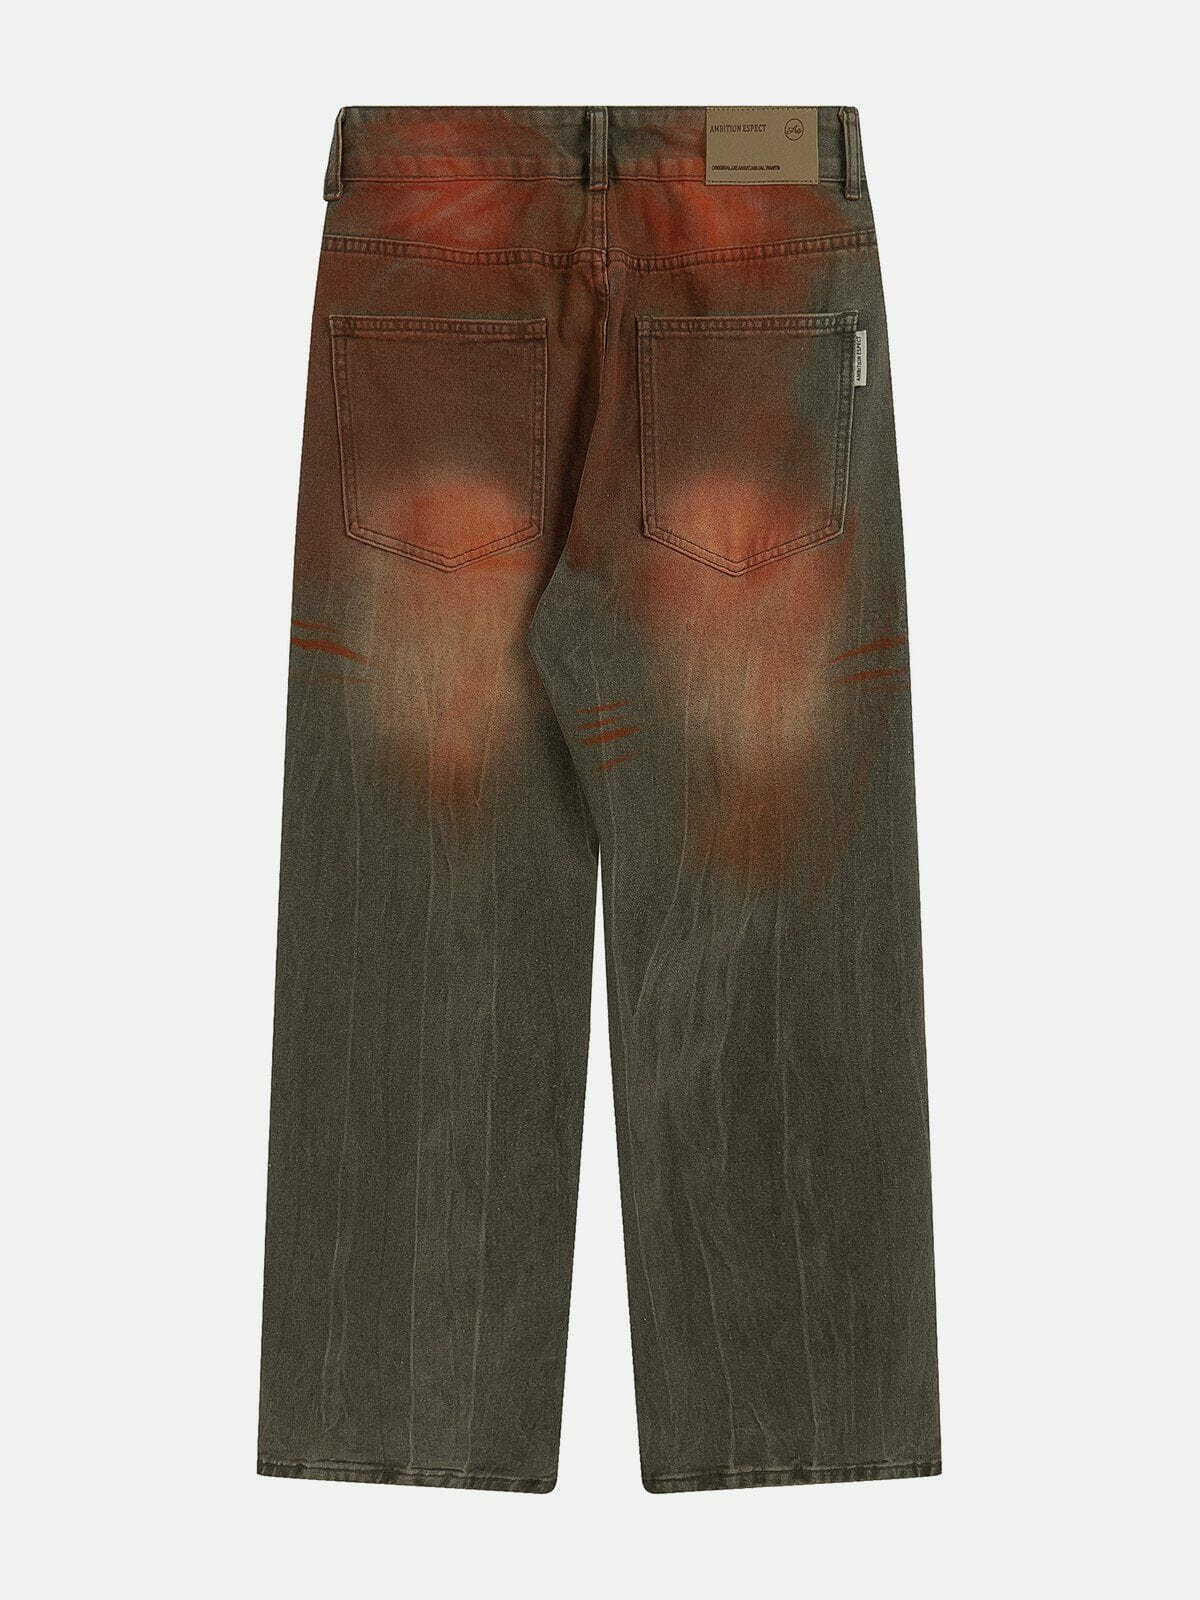 retro gradient jeans edgy & vibrant streetwear 4683